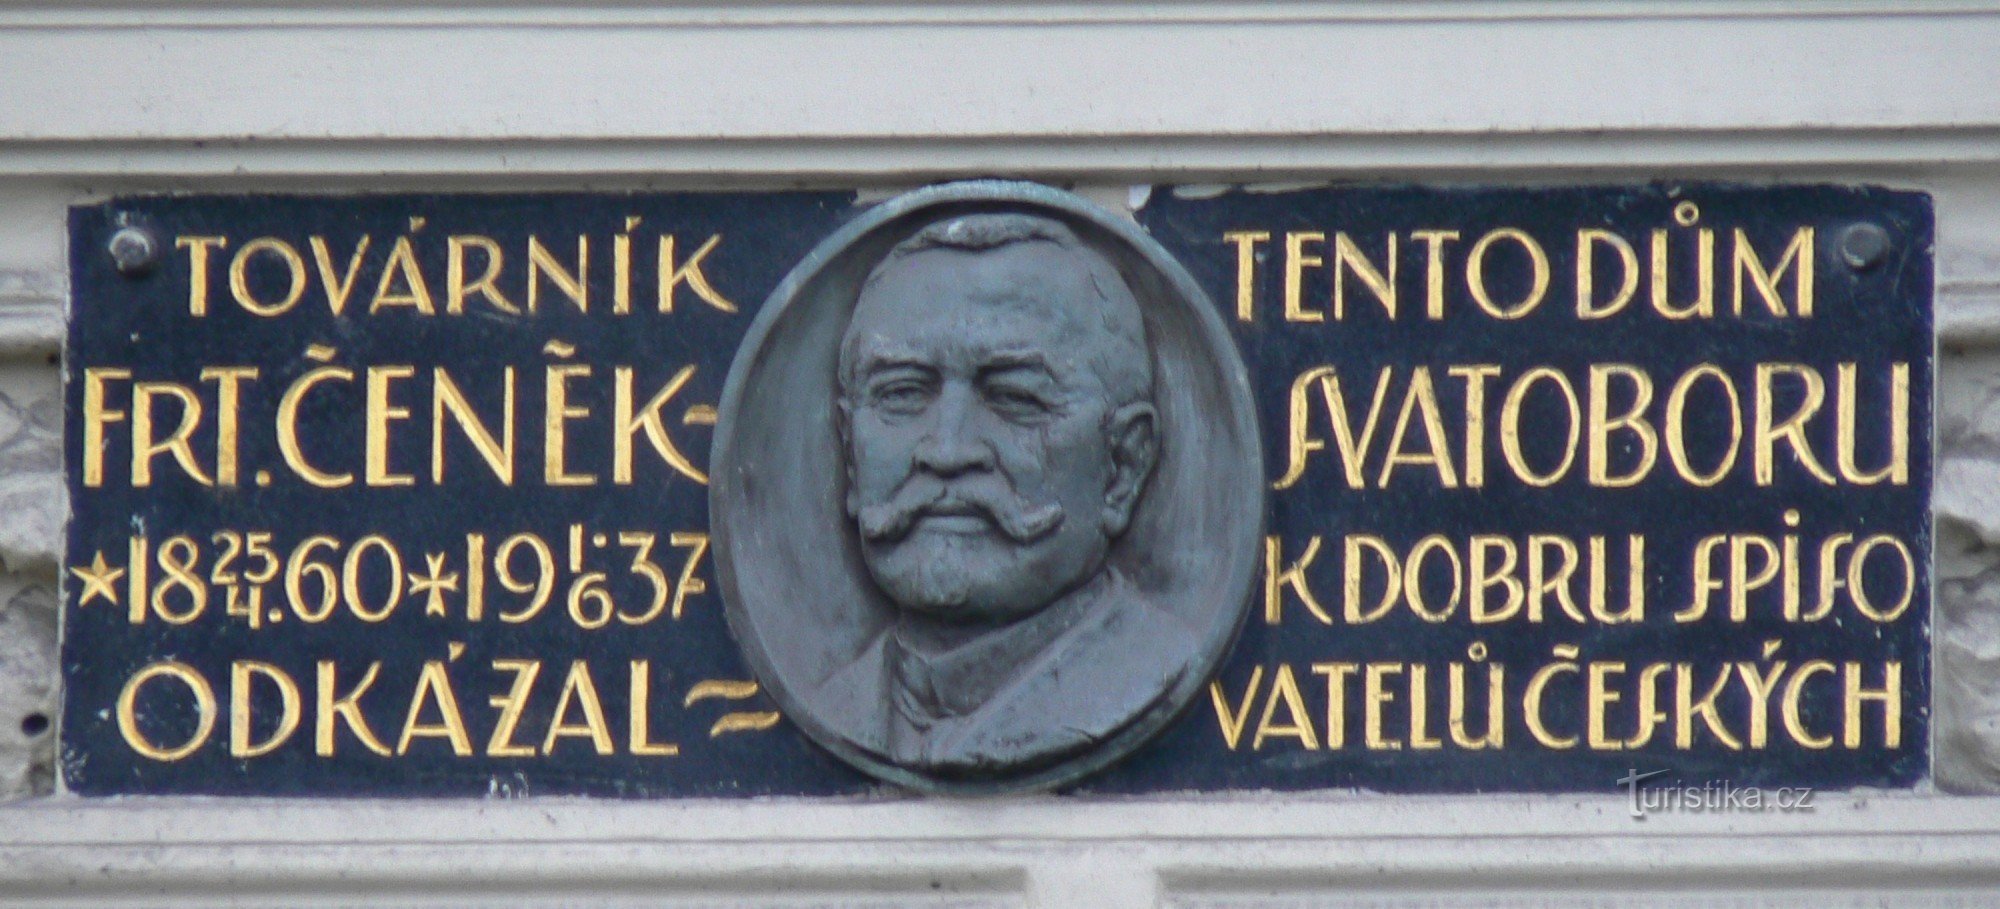 Spomen ploča Františeka Čeněka